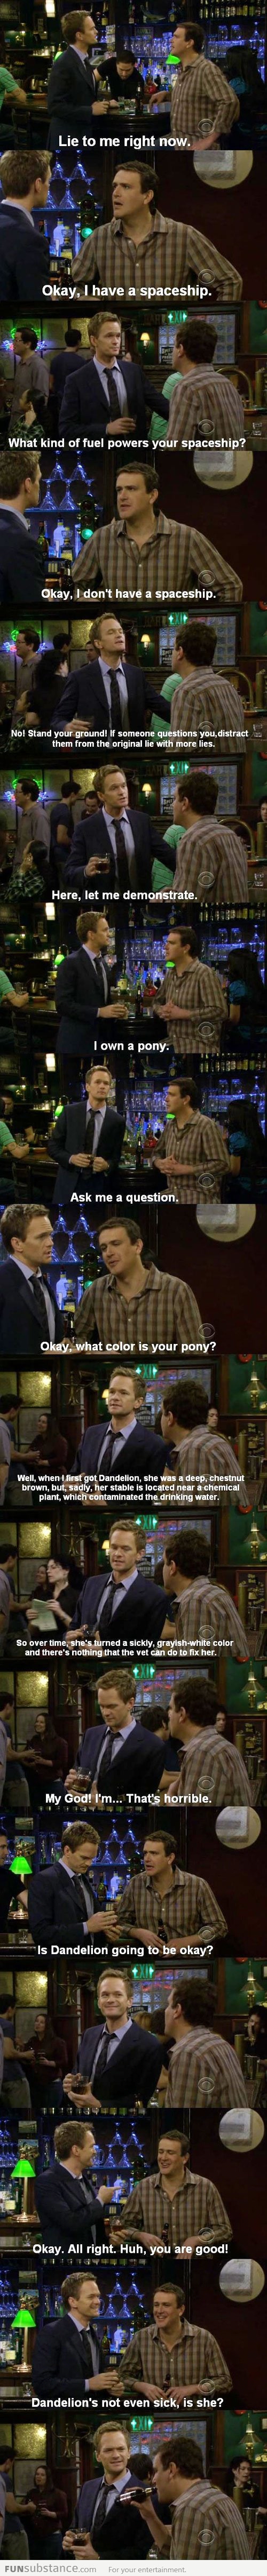 Barney's awesome lying skills...